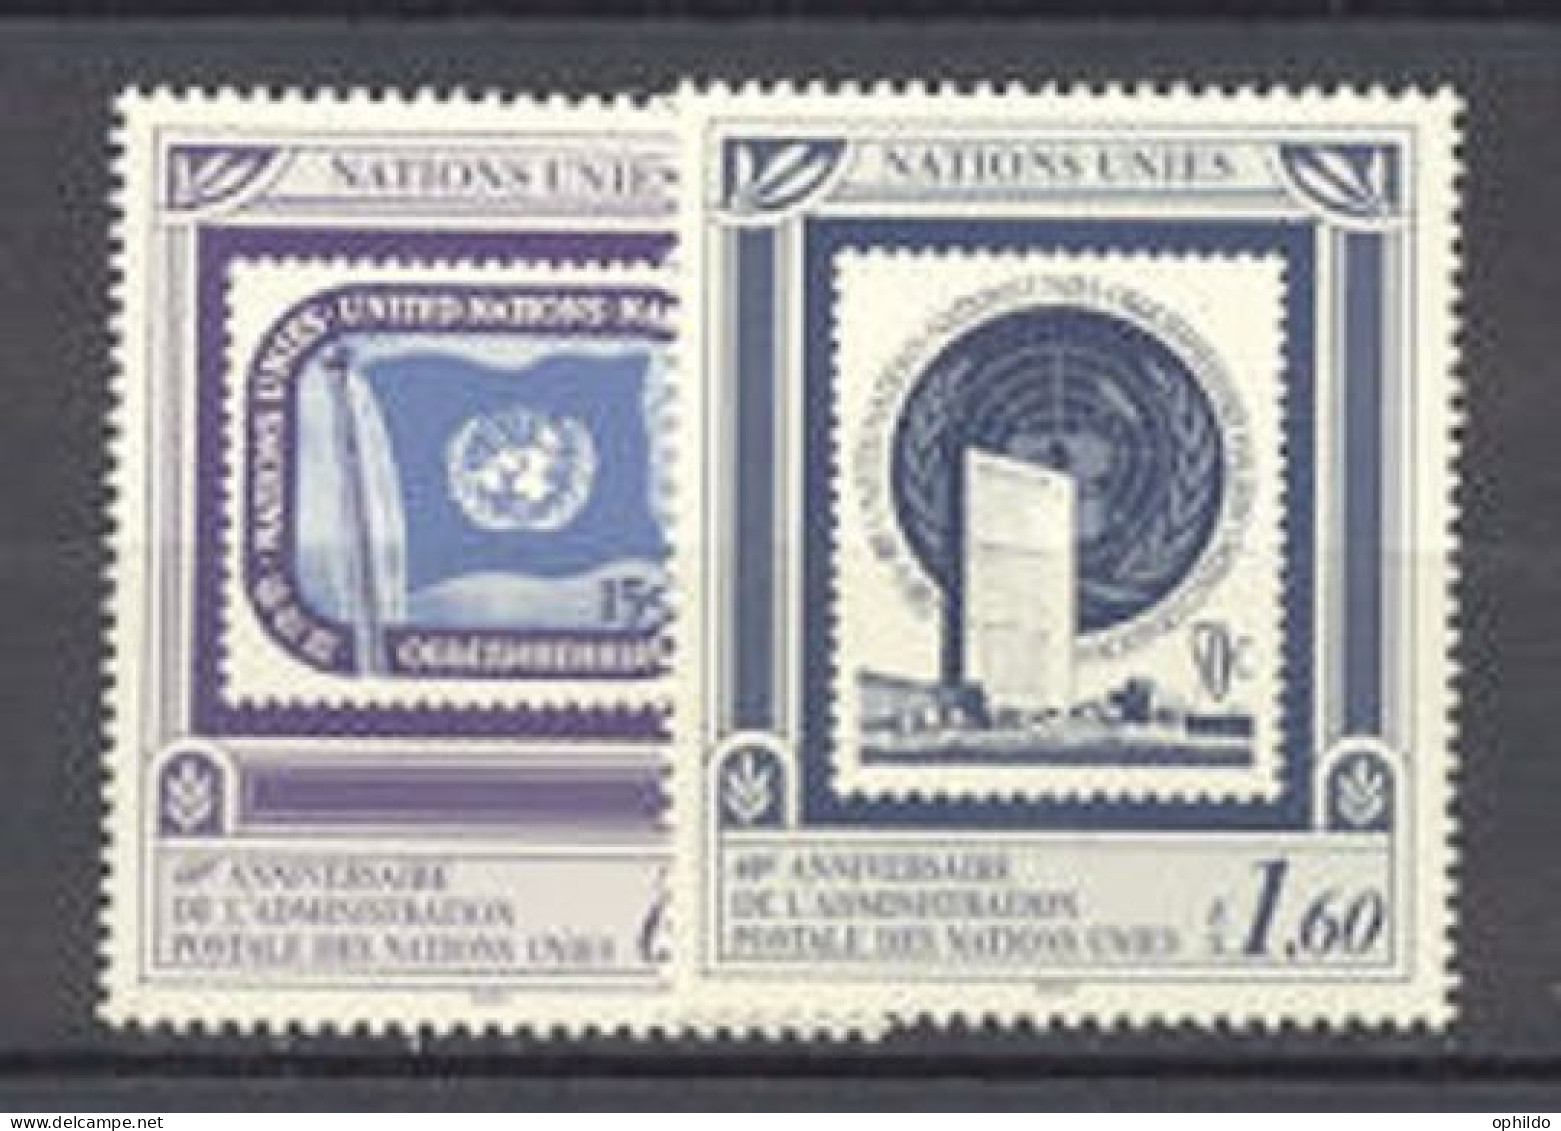 Nations Unies  Genève   214/215  * *  TB    - Unused Stamps